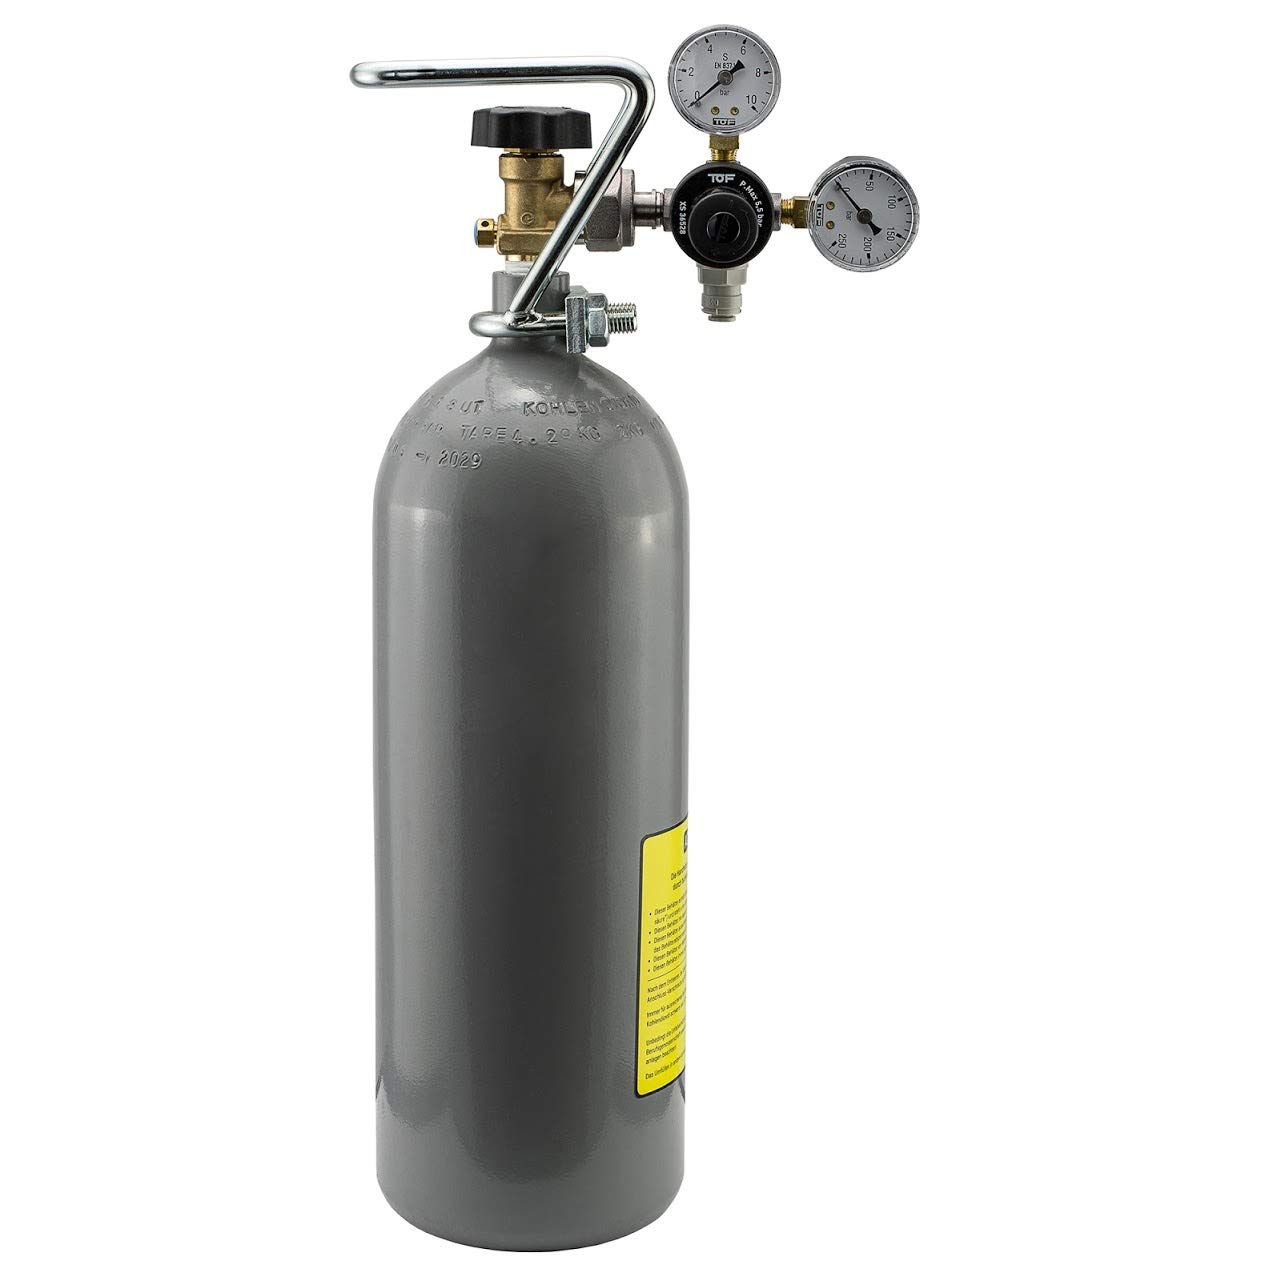 CO2 Druckminderer inkl. 2 kg CO2 Flasche geeignet für Brita Yource System Wassersprudler Sprudelsystem Sprudelgerät Sprudler